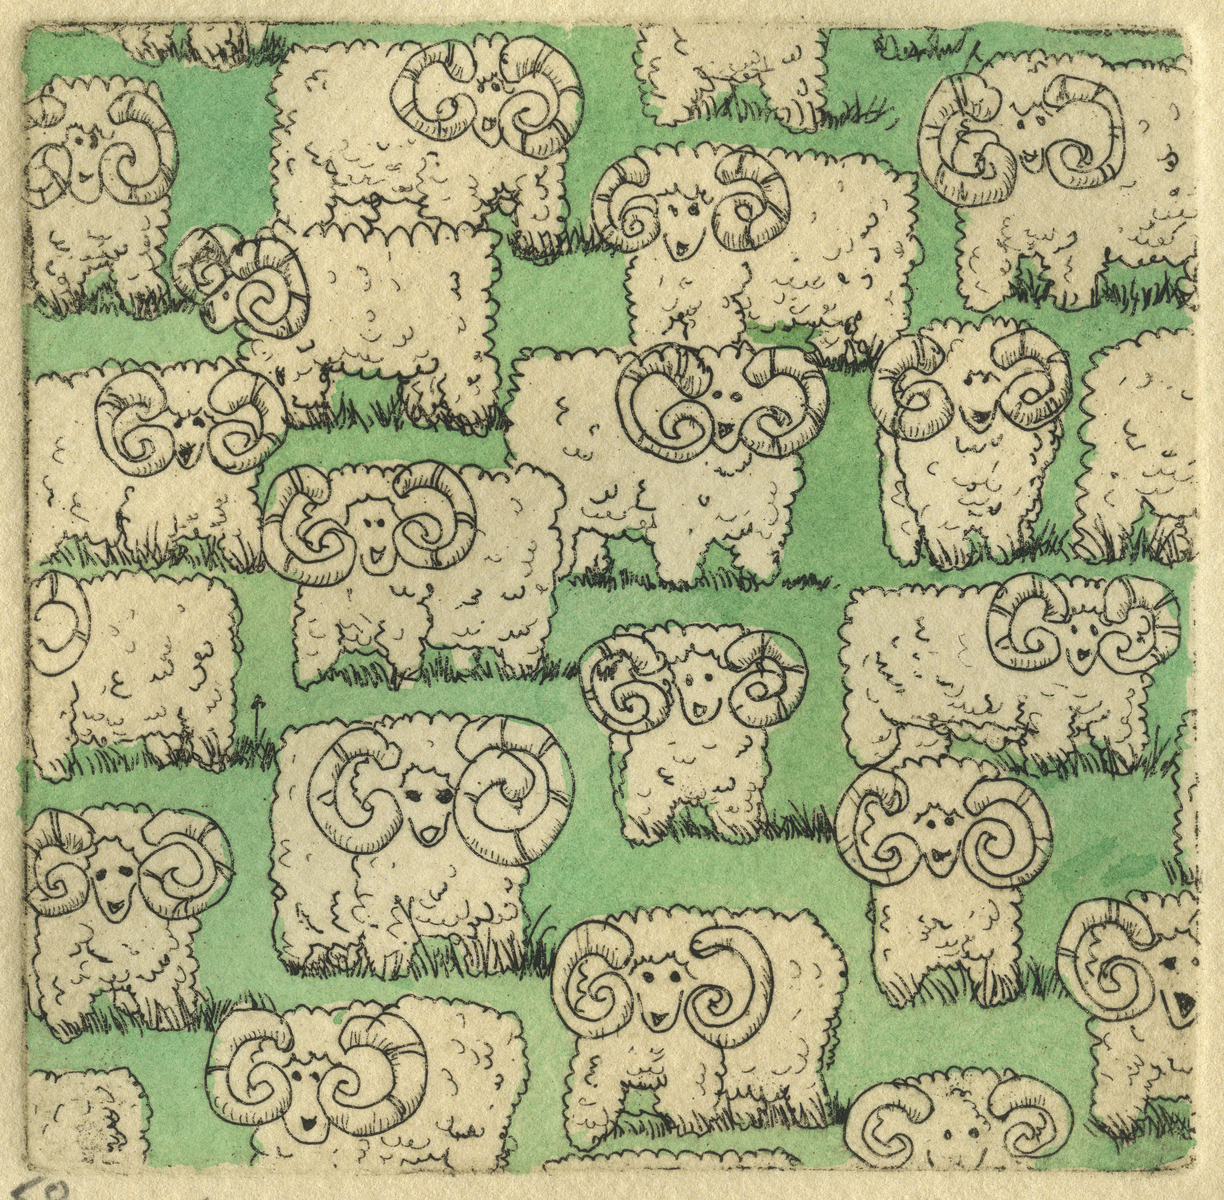 Congregated Creatures – Sheep